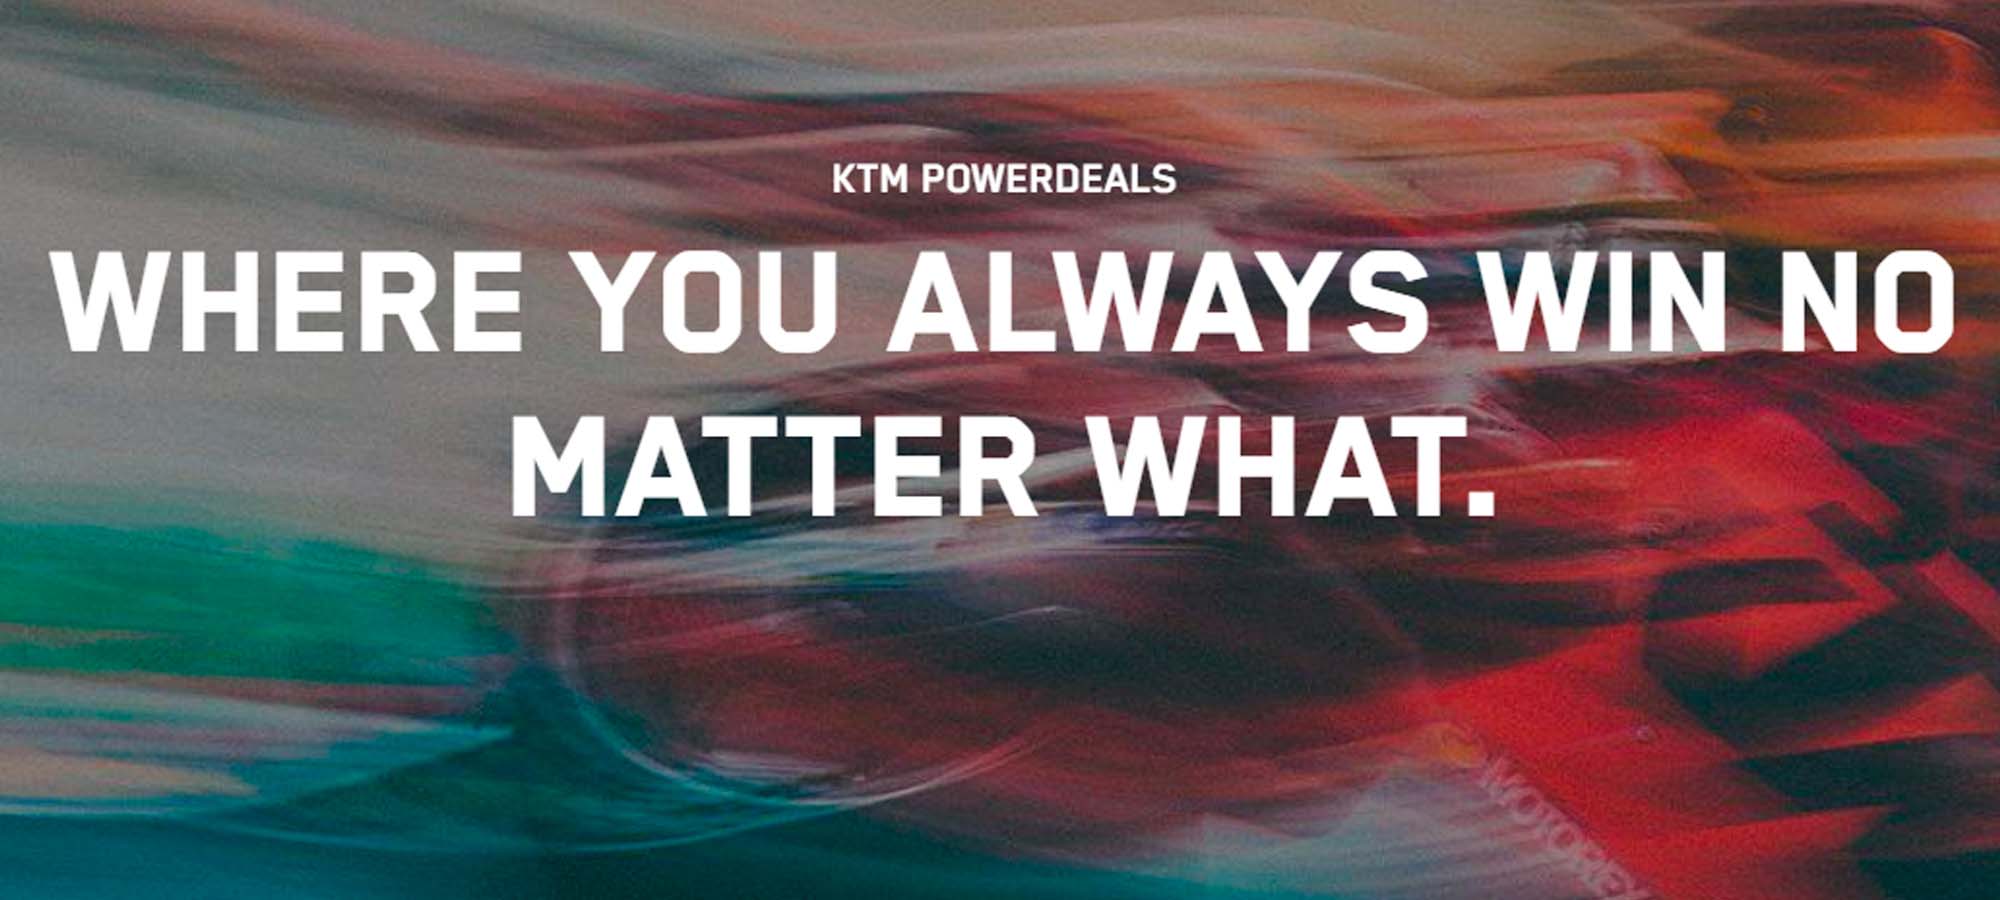 KTM US - KTM POWERDEALS RETAIL SALES PROMOTIONS b at Hebeler Sales & Service, Lockport, NY 14094